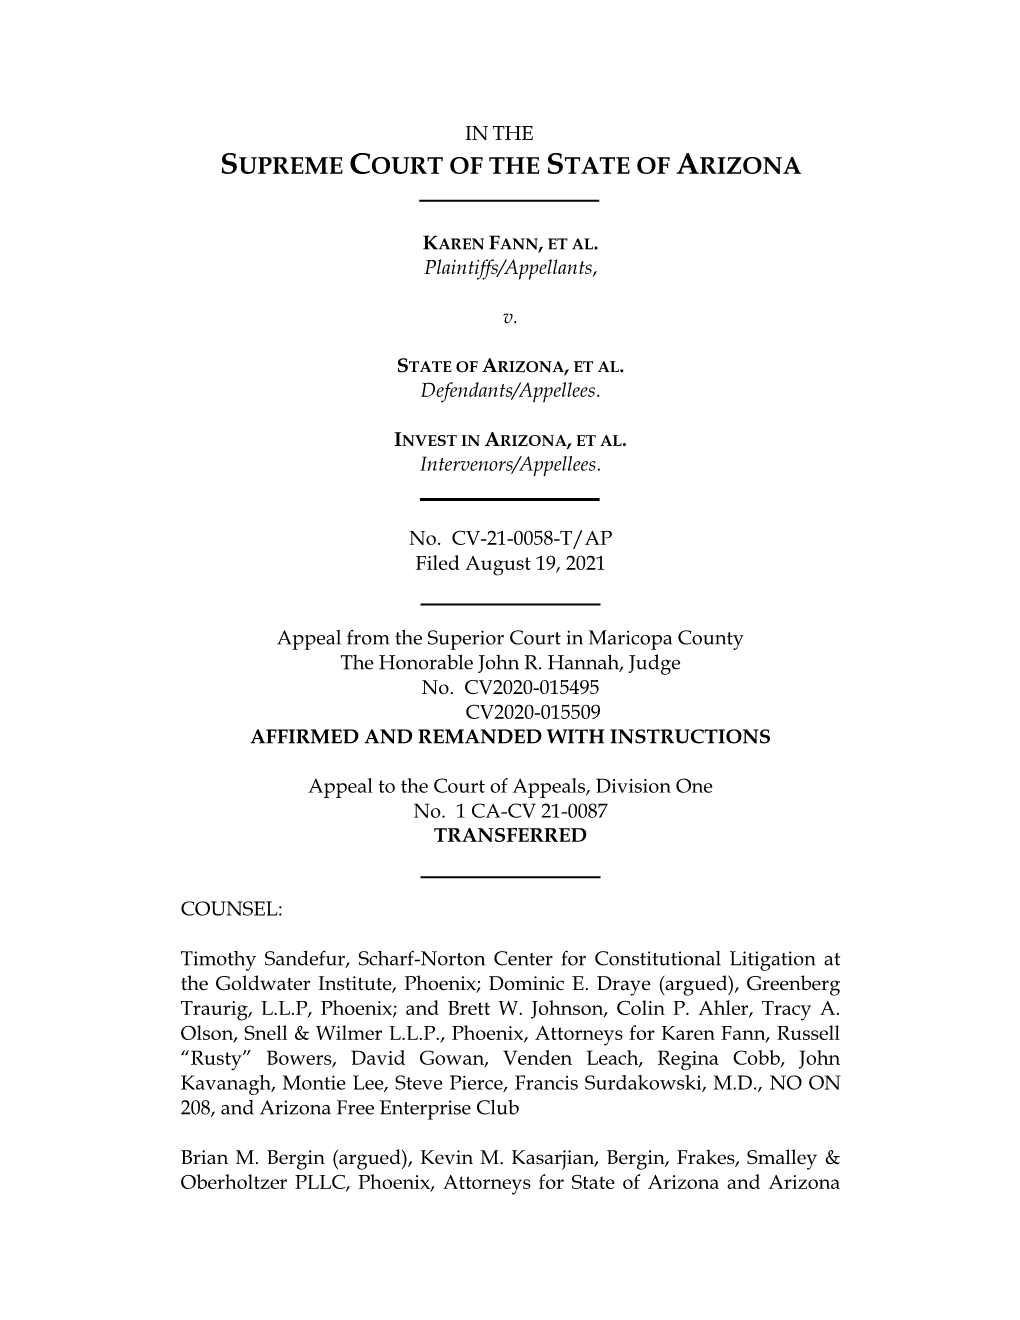 Supreme Court of the State of Arizona